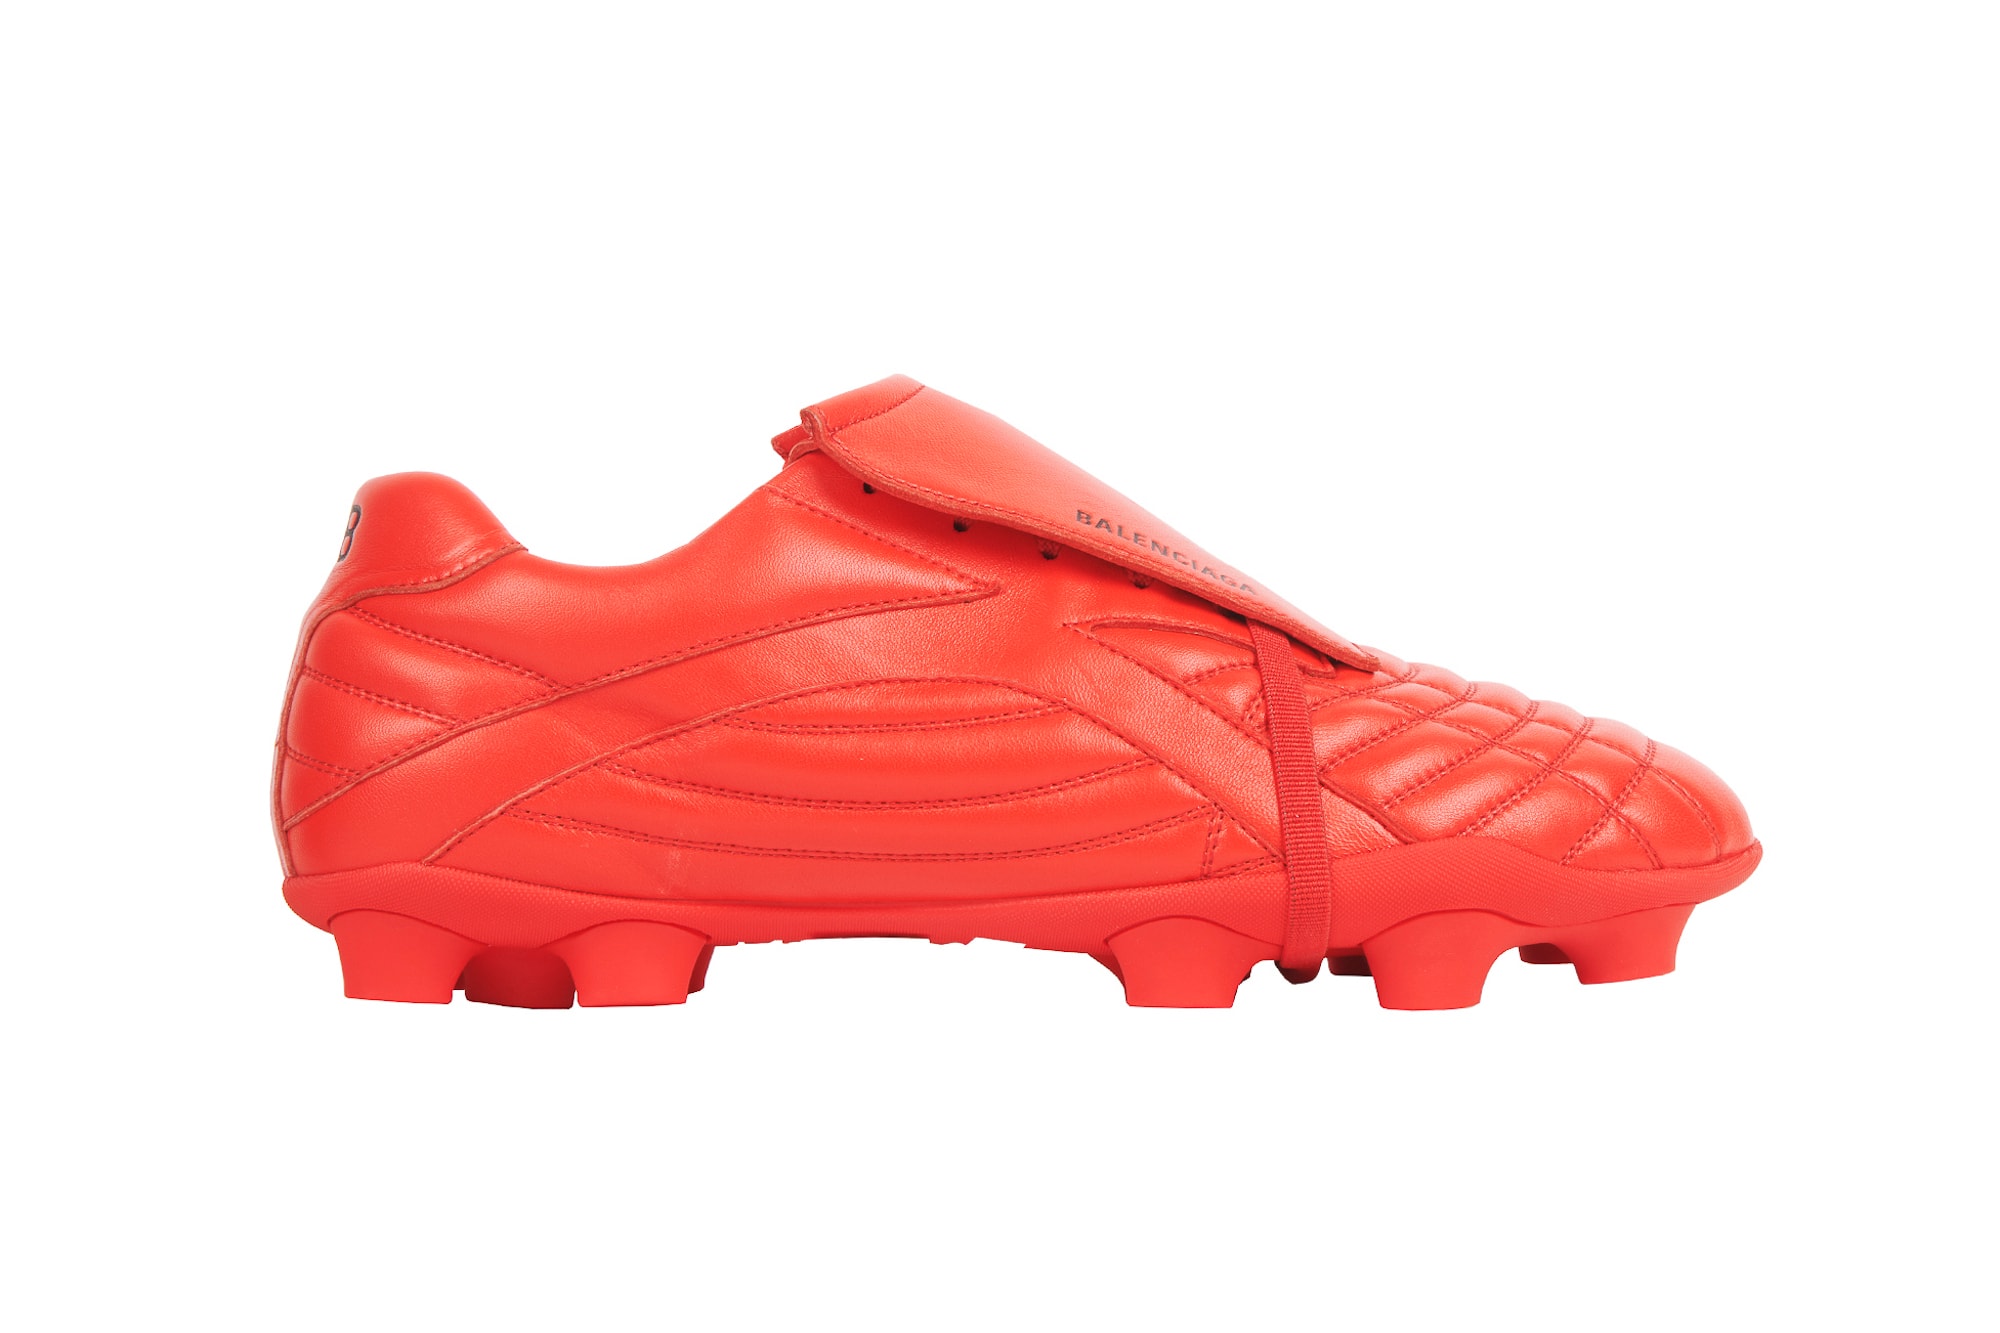 Balenciaga Soccer Cleats Football Boot Sneaker Release Shoe Fall/Winter 2020 Collection Where to Buy